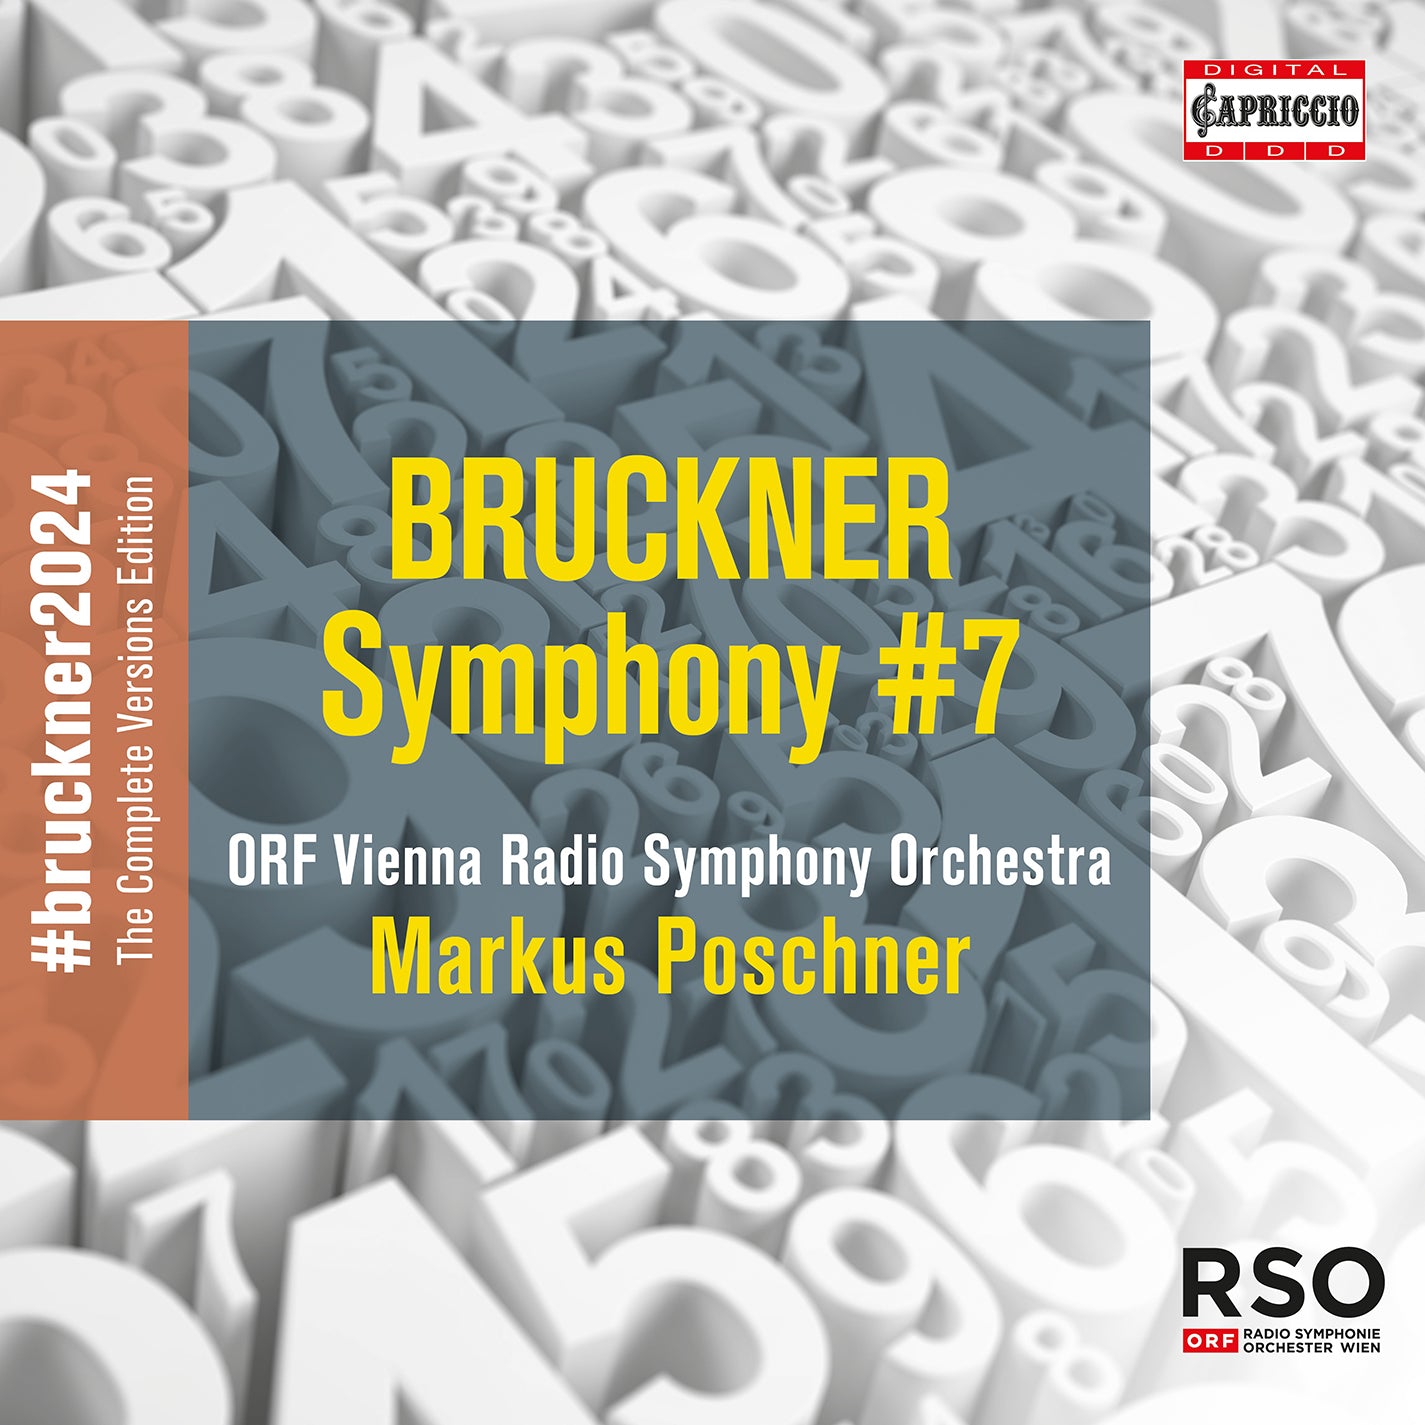 Bruckner: Symphony No. 7  Orf Vienna Radio Symphony Orchestra